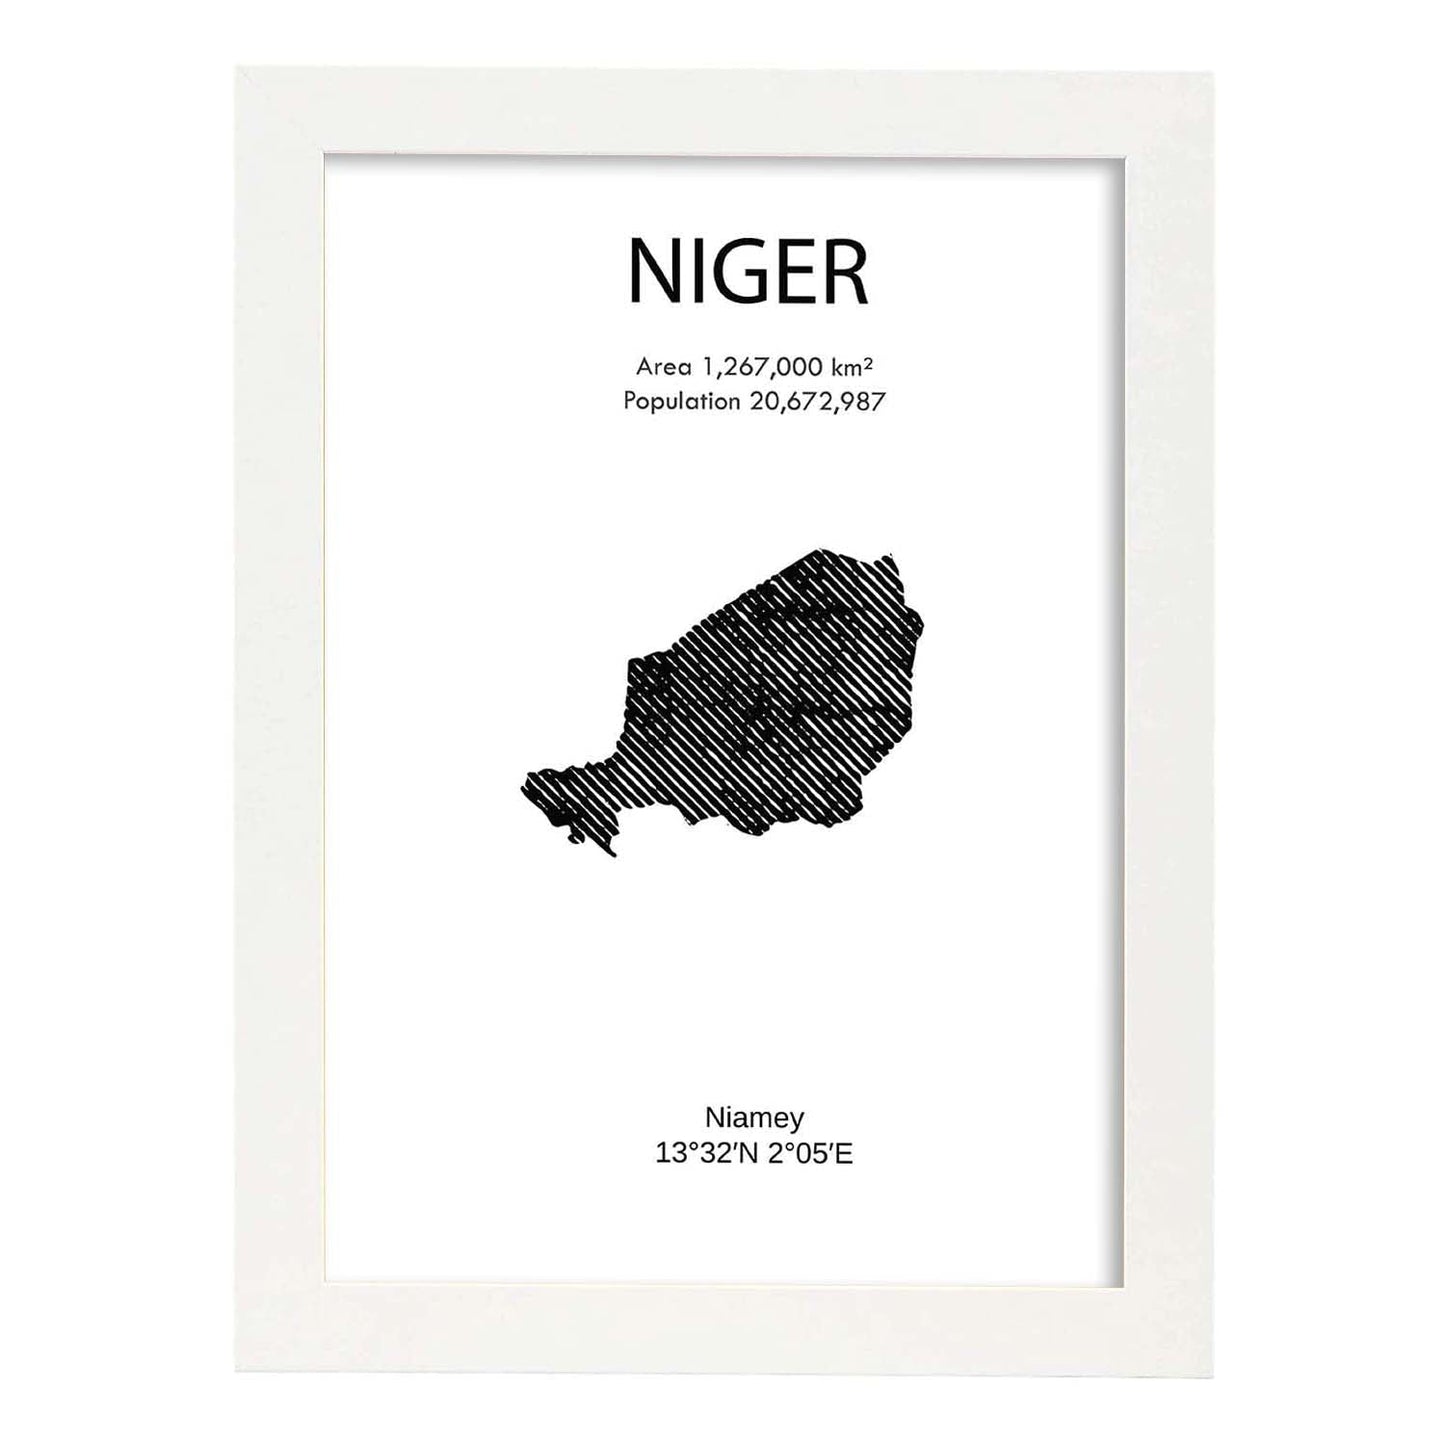 Poster de Niger. Láminas de paises y continentes del mundo.-Artwork-Nacnic-A3-Marco Blanco-Nacnic Estudio SL